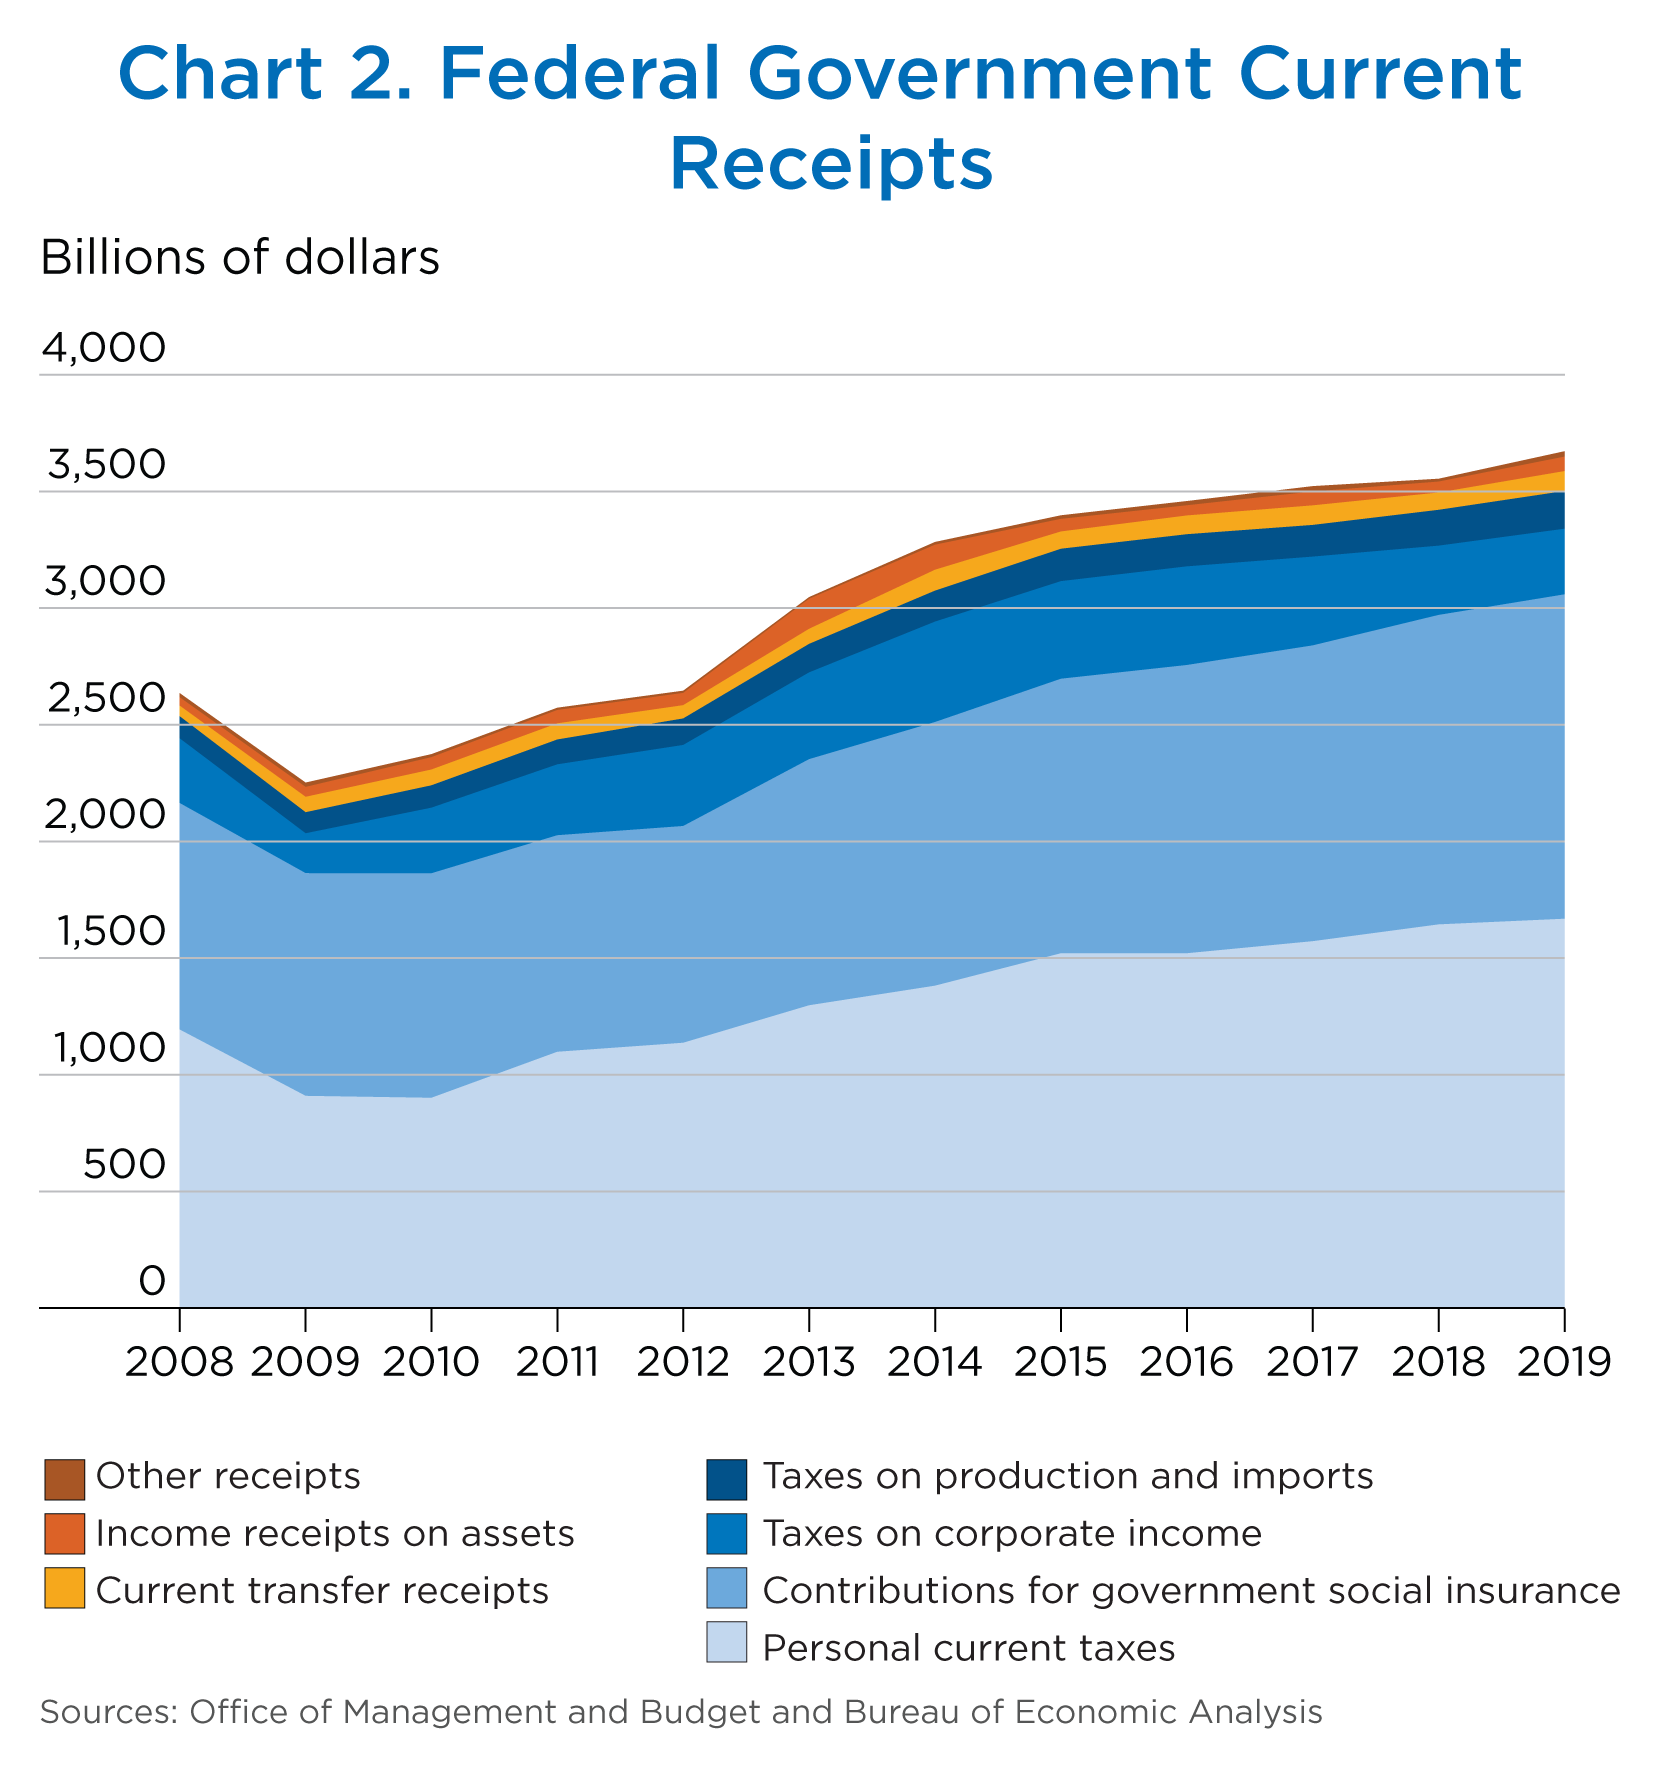 Chart 2. Federal Government Current Receipts, Bar Chart